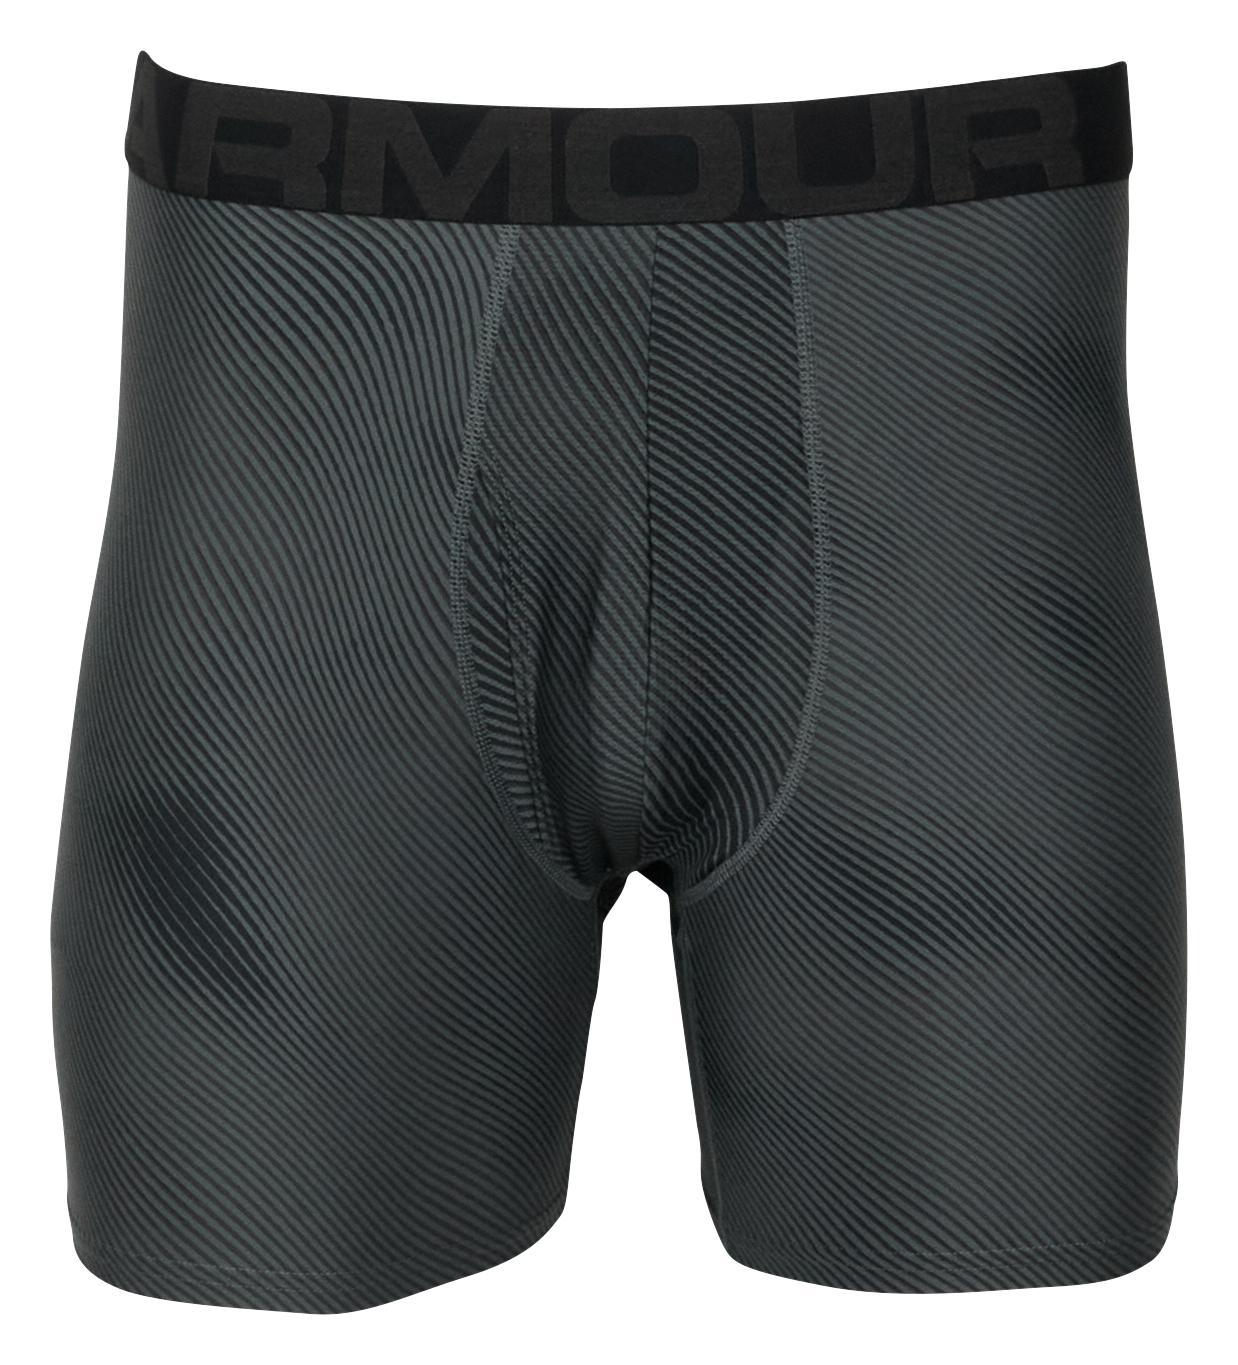 Under Armour Tech 6"" Patterned Boxerjock Shorts for Men - Pitch/Jet Gray - M